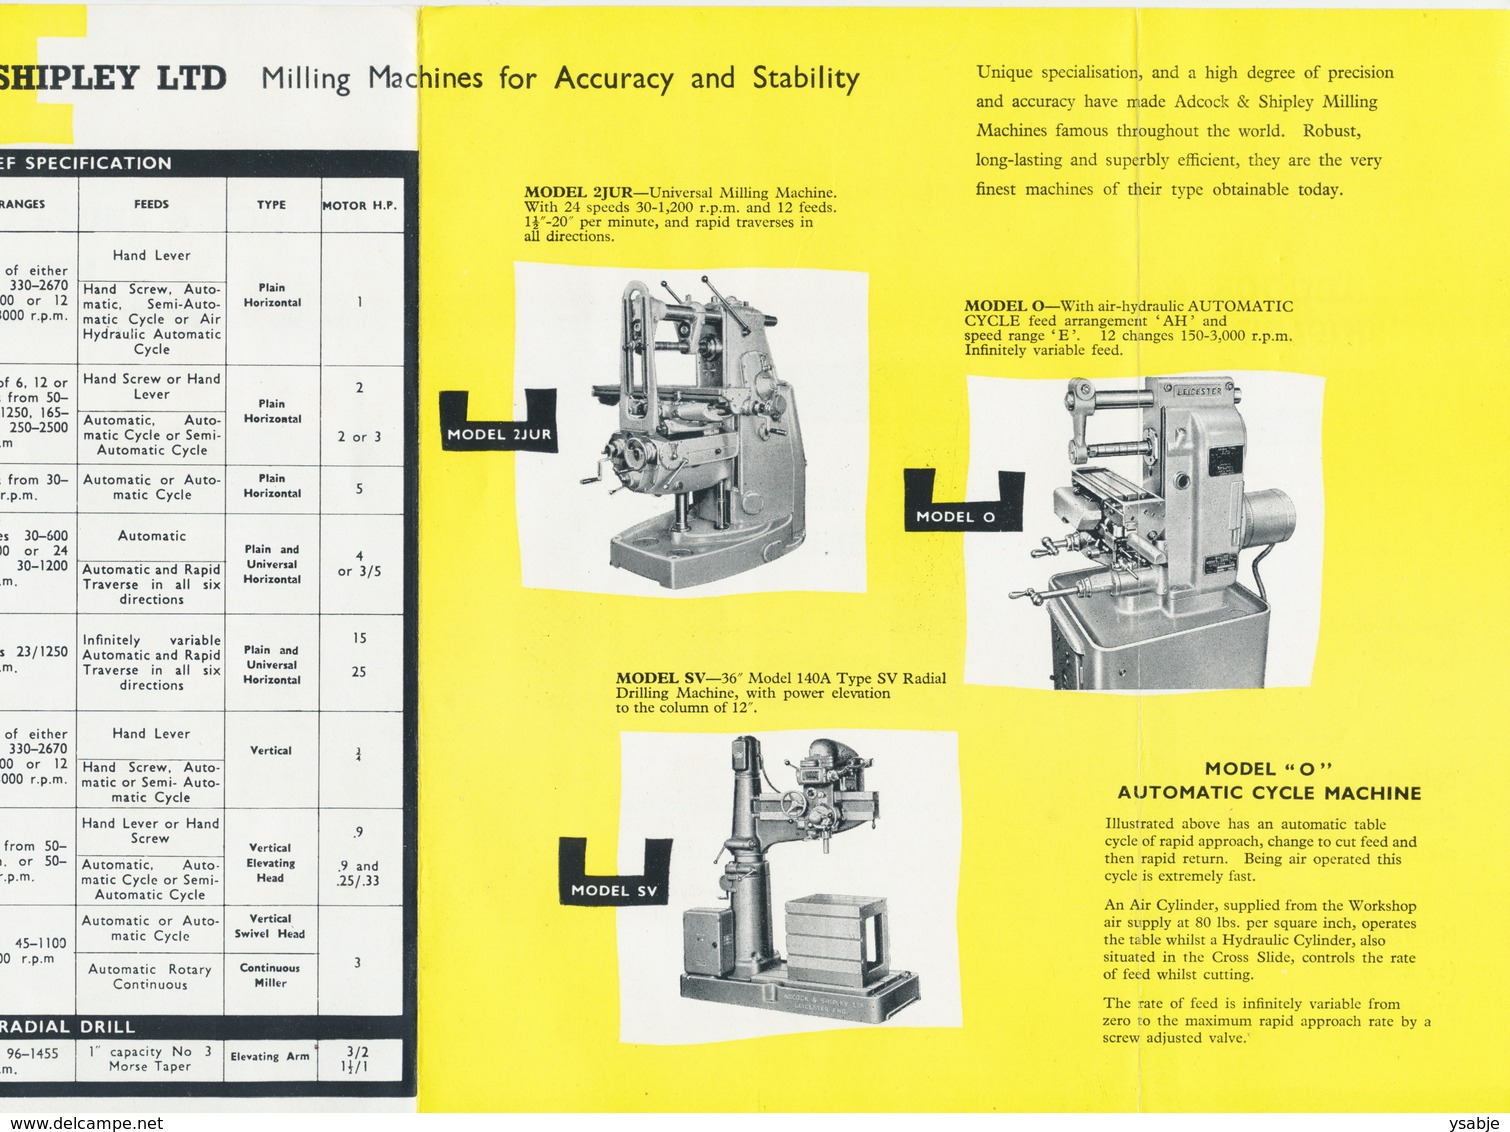 Adcock & Shipley Ltd - Milling Machines - Reclamefolder - Andere Geräte